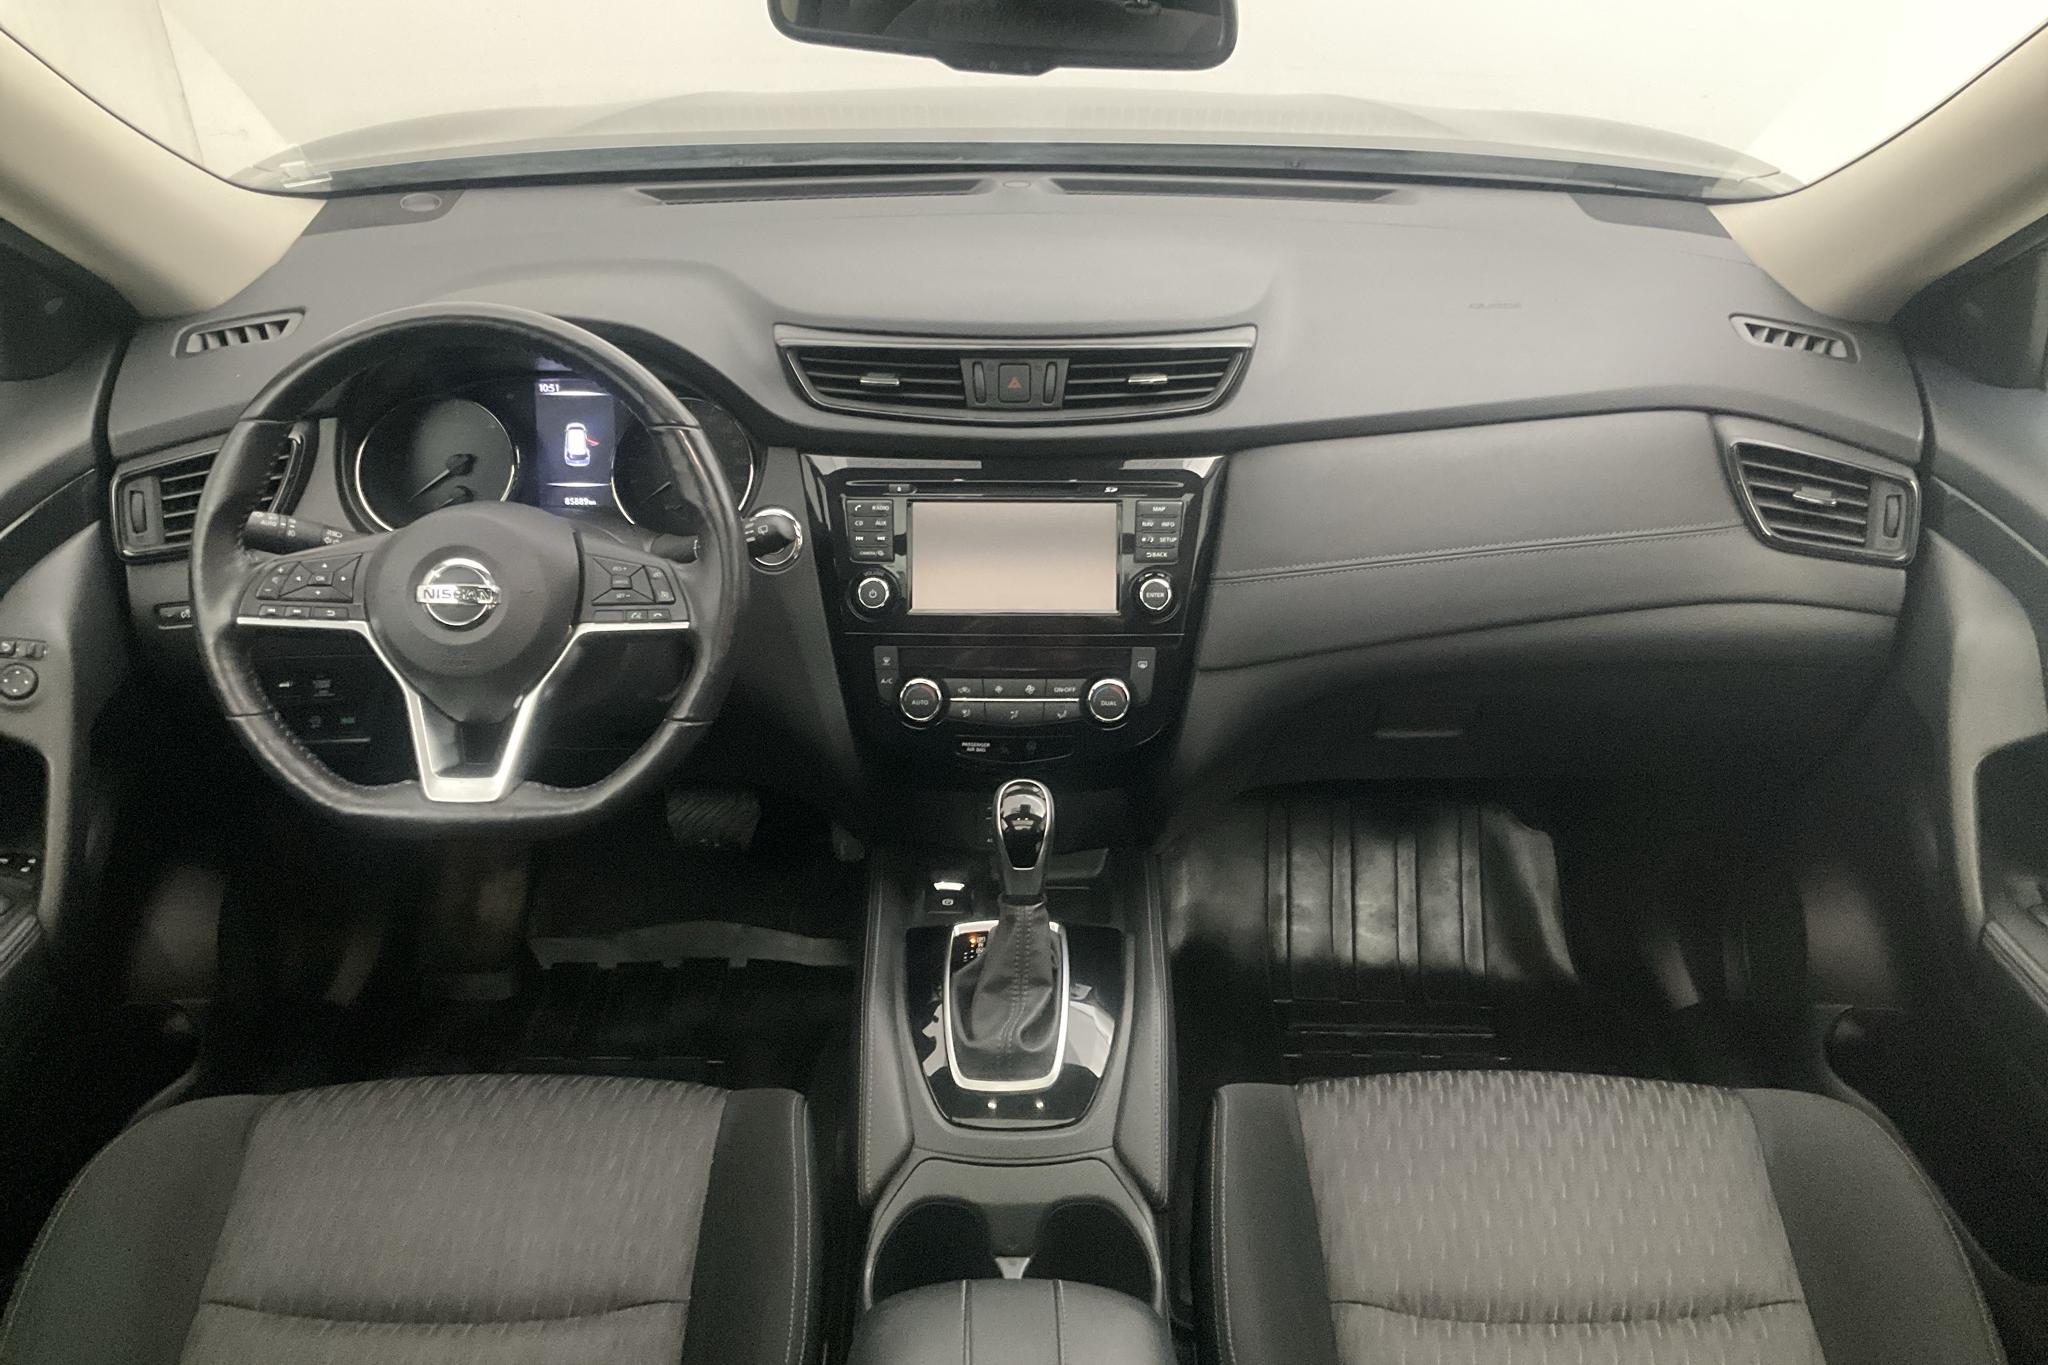 Nissan X-trail 1.7 dCi 2WD (150hk) - 85 880 km - Automatic - gray - 2019